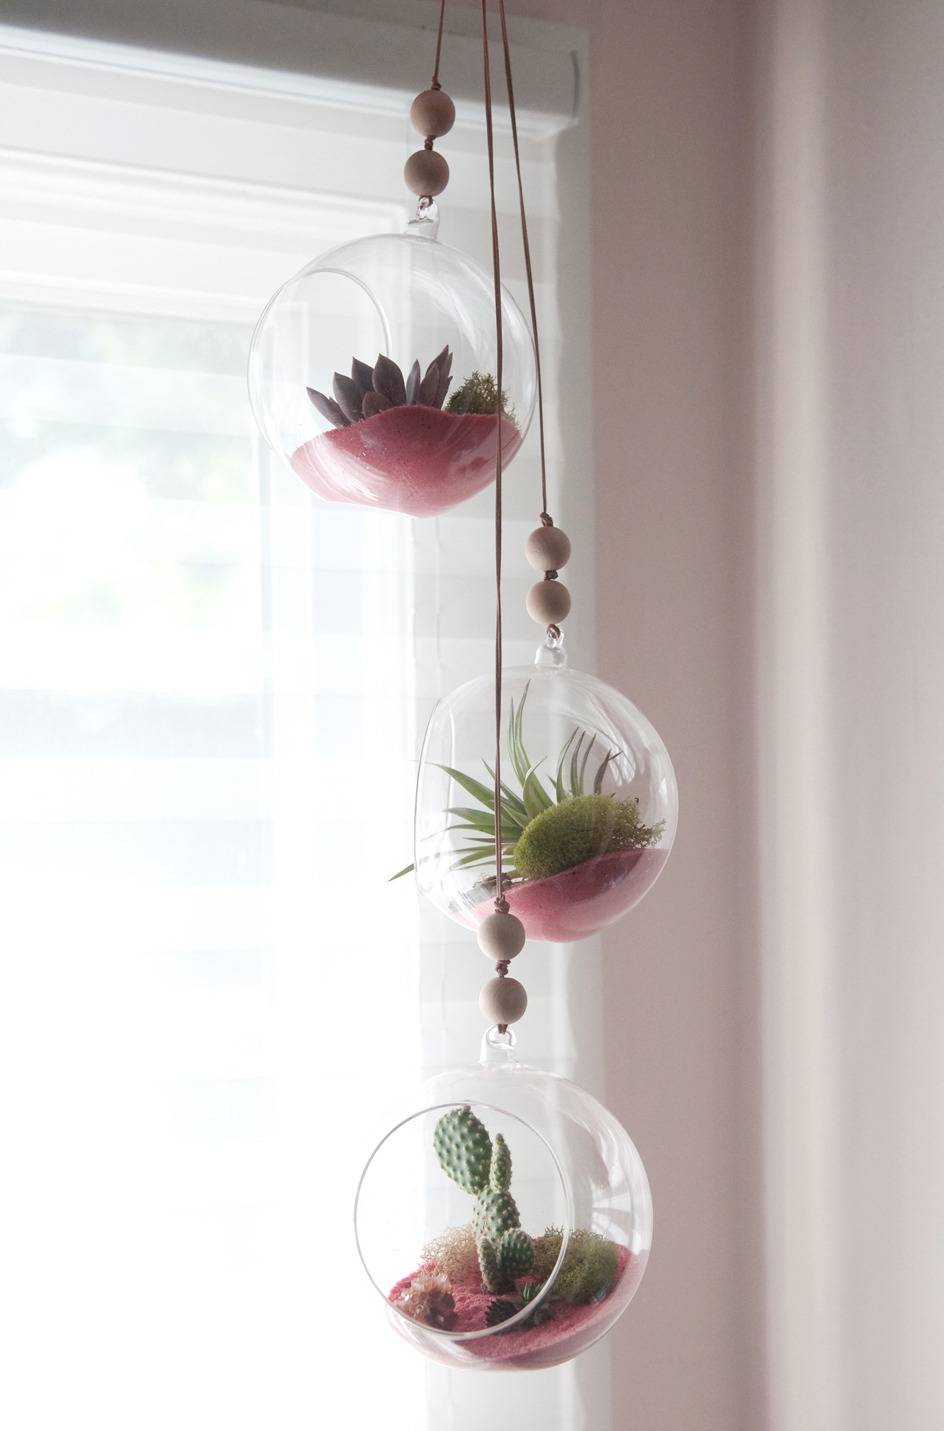 A three hanging glass plant pots near the window